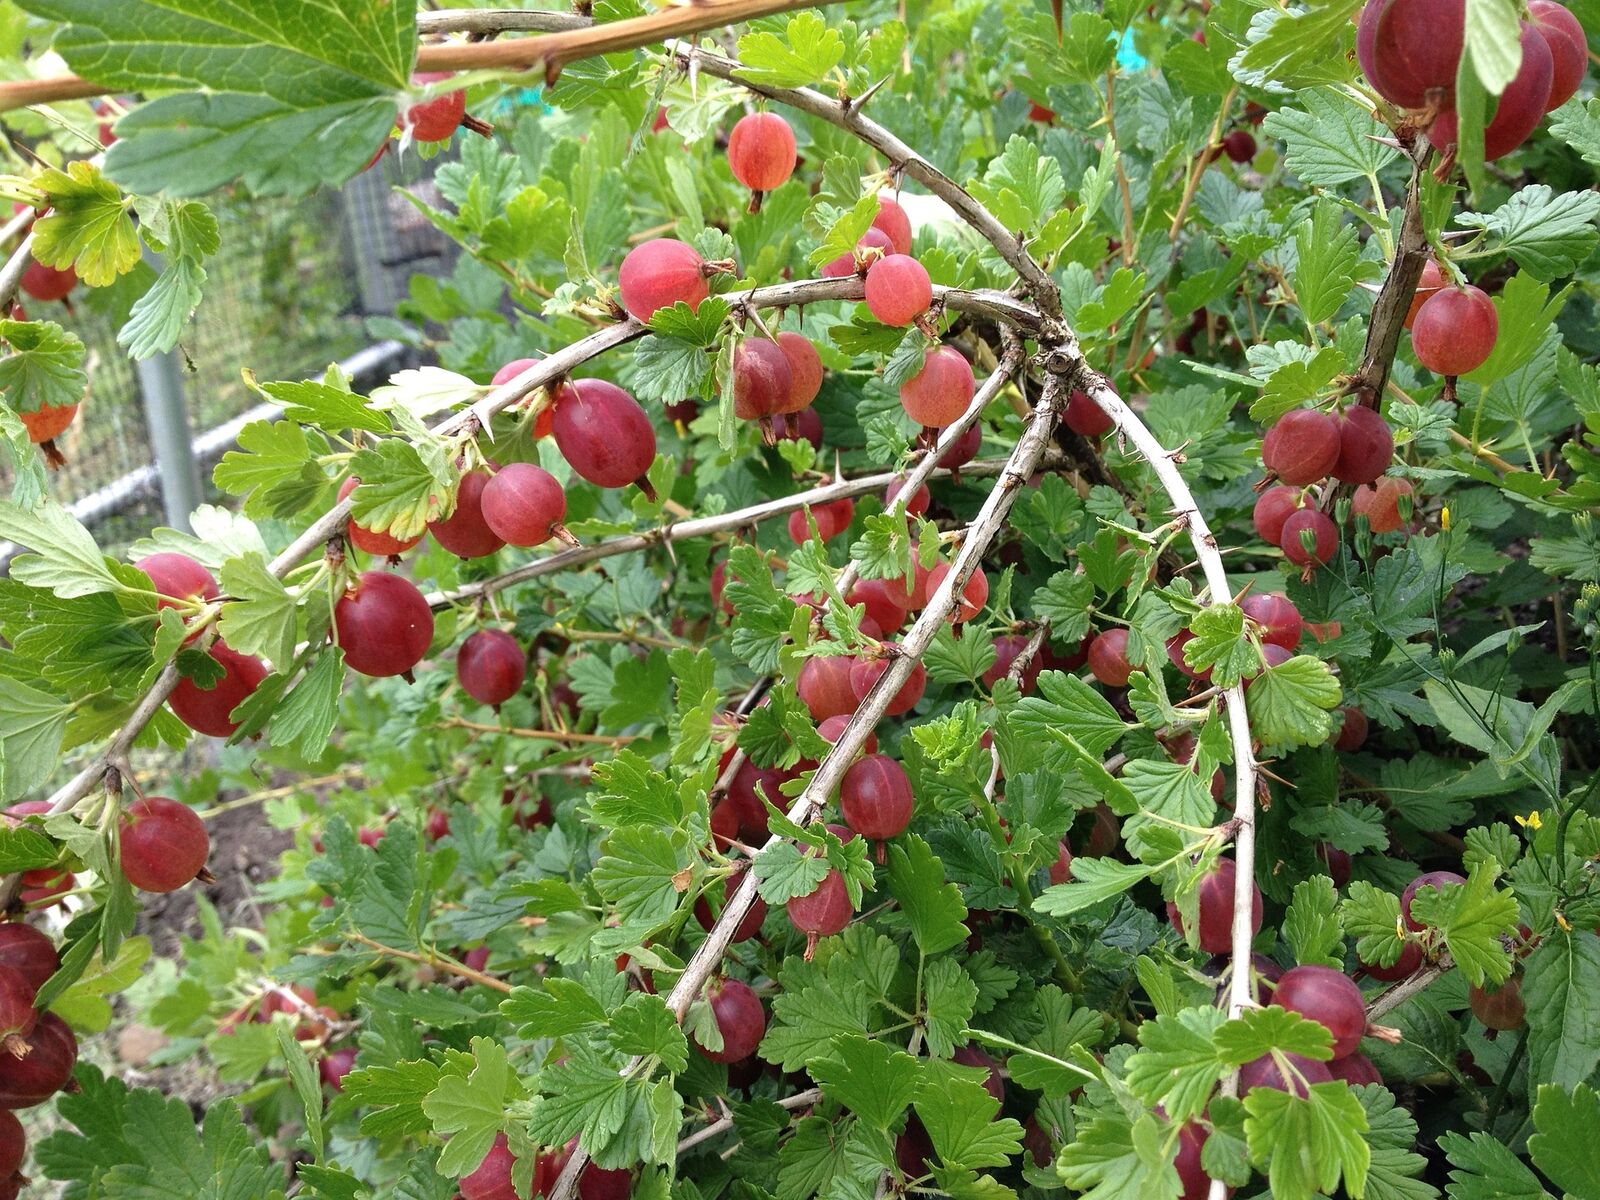 Pruning gooseberry bushes